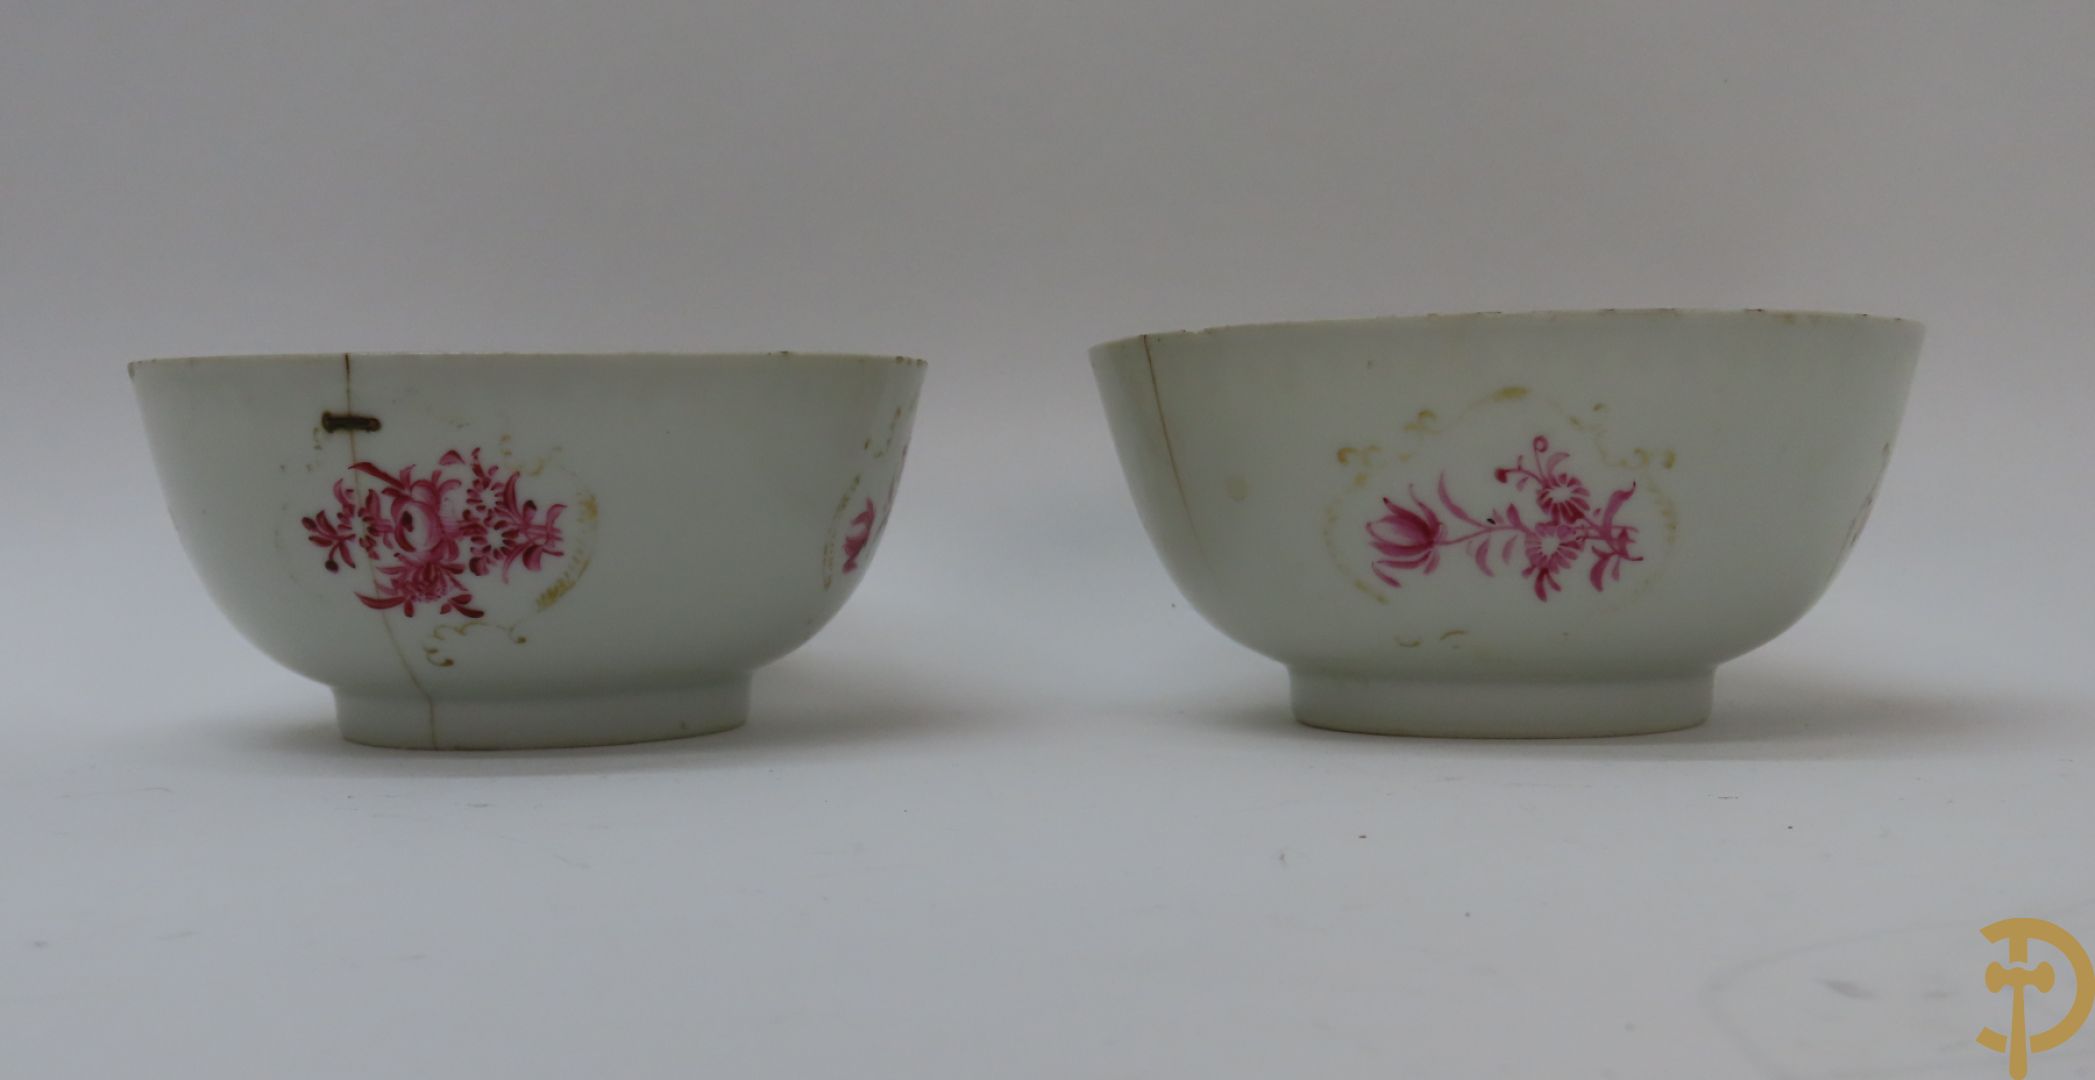 Twee Chinese porseleinen melkkannen + saucière Famille rose + 5 Chinese porseleinen kommetjes (randschilfering en haarlijnen)